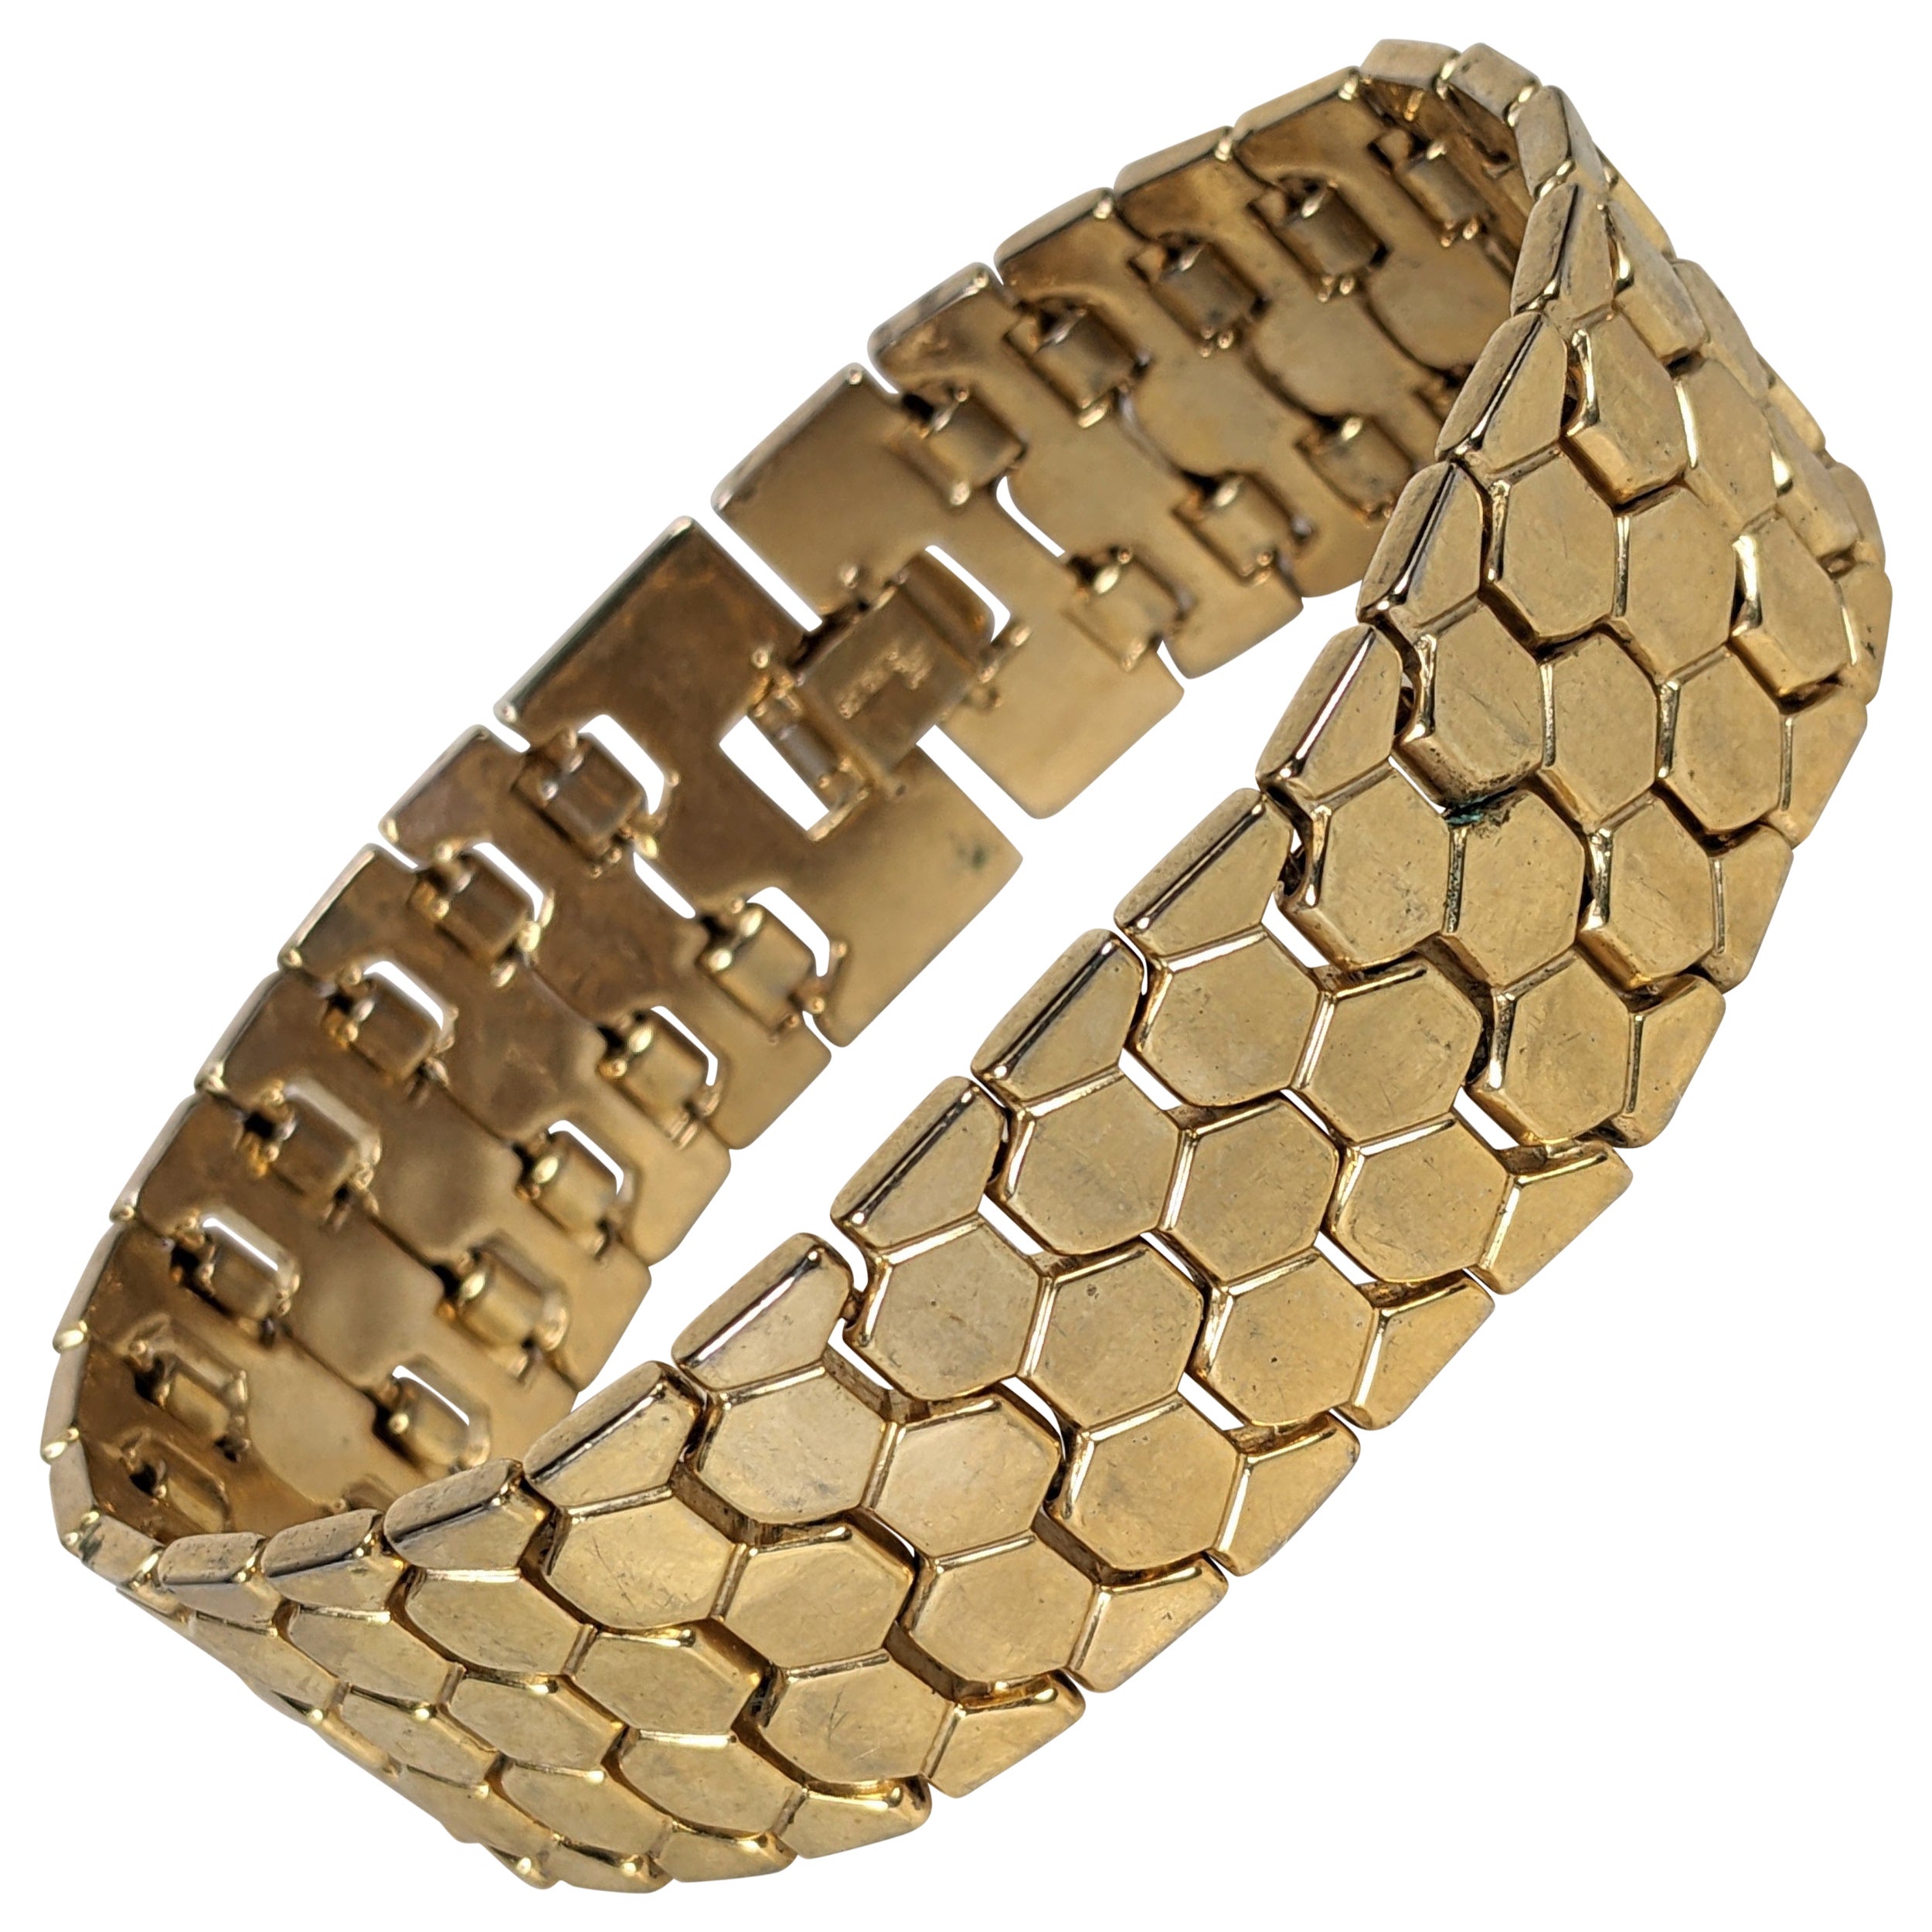 Trifari Honeycomb Link Retro Bracelet